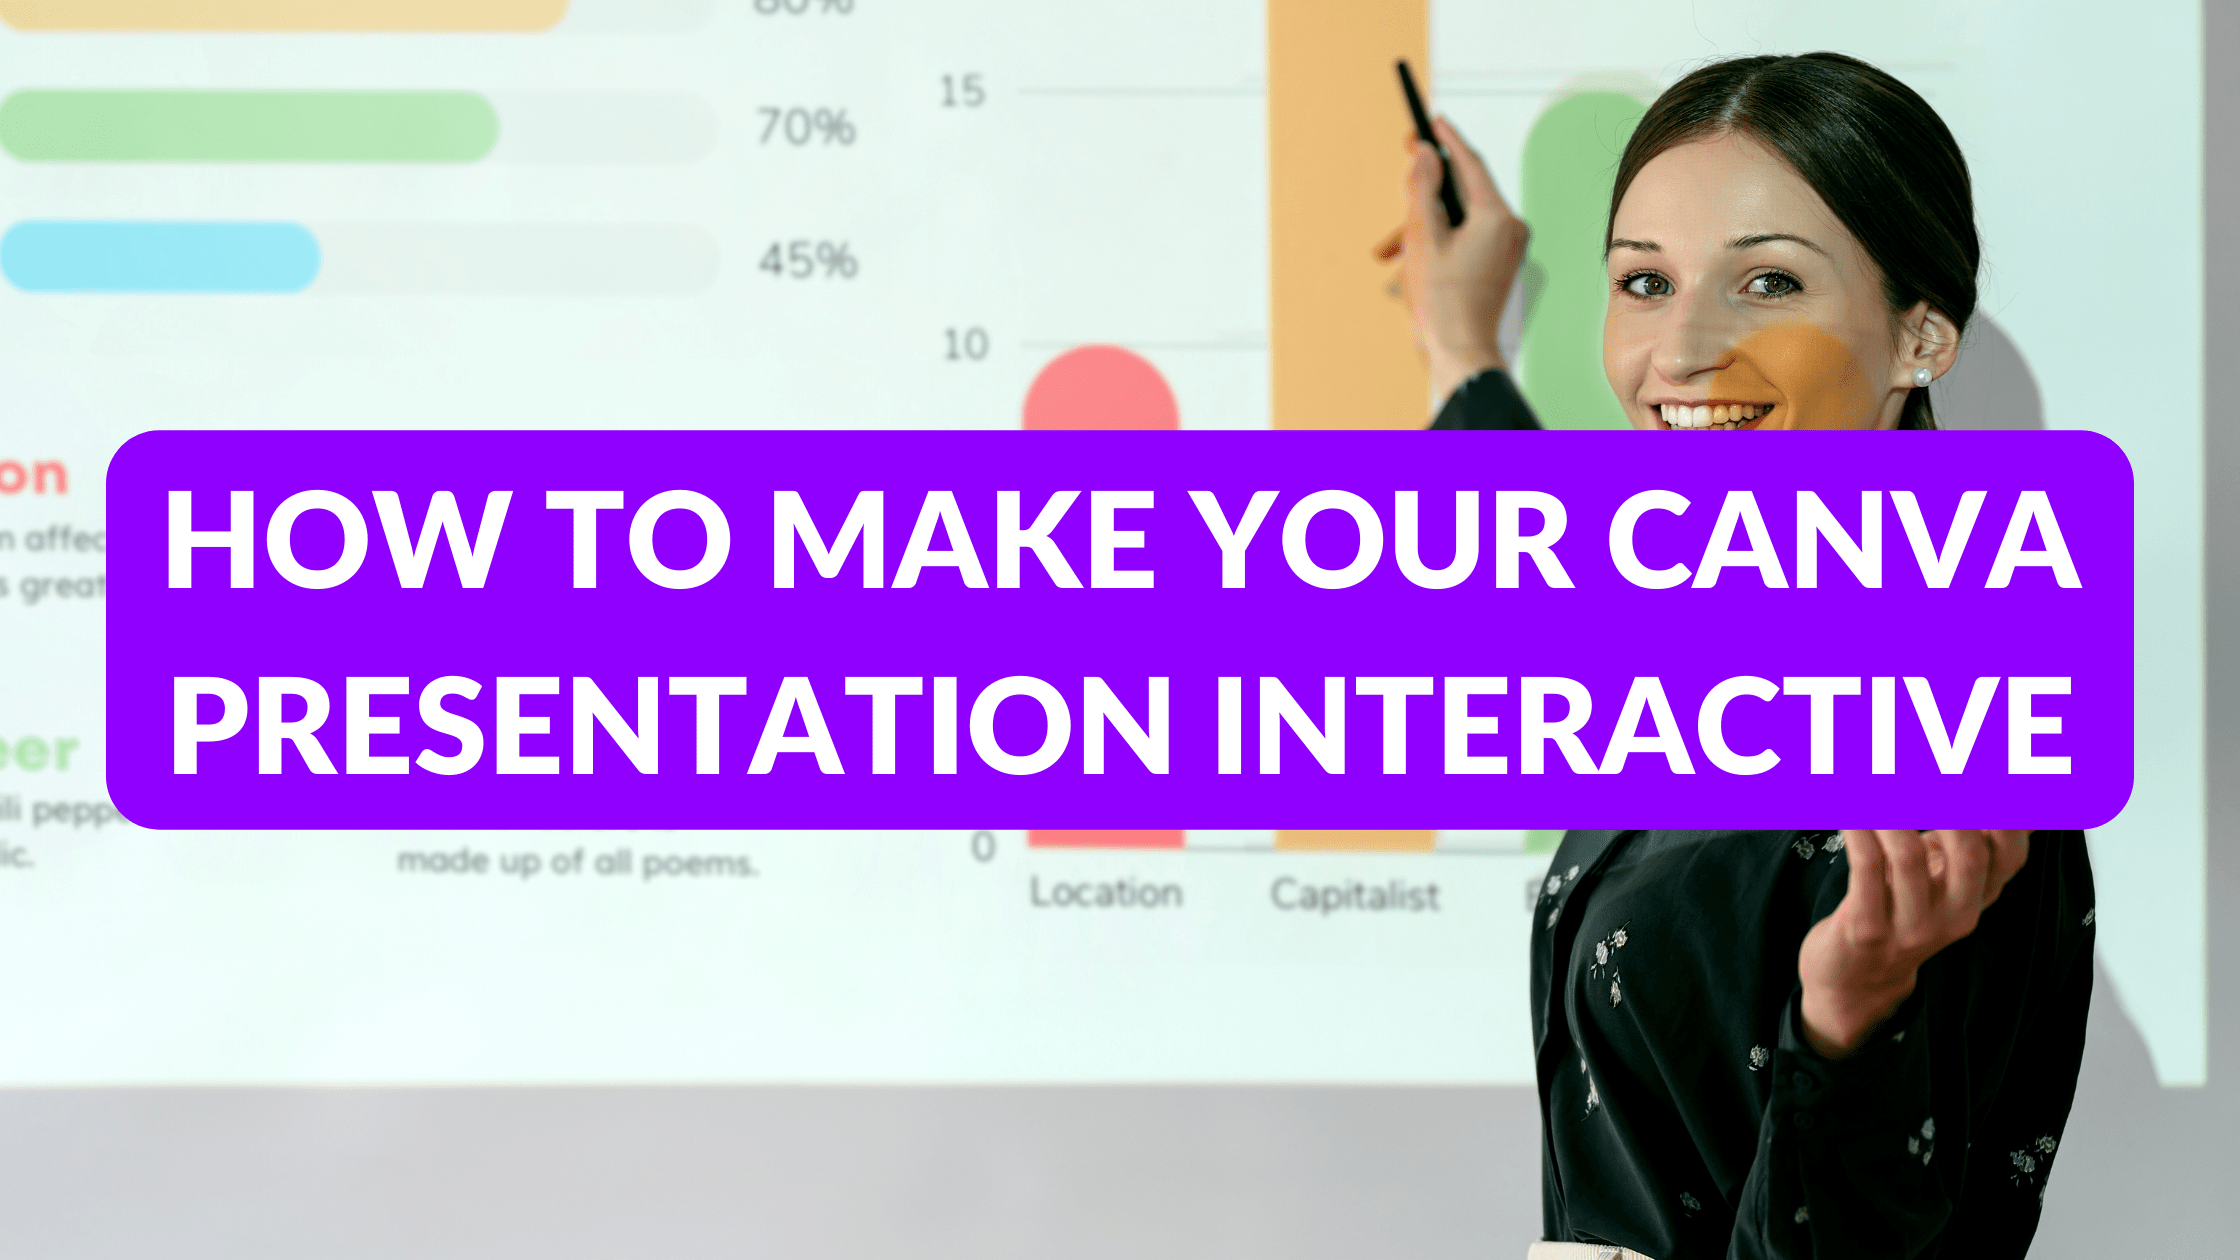 Ways To Make Your Presentation Interactive